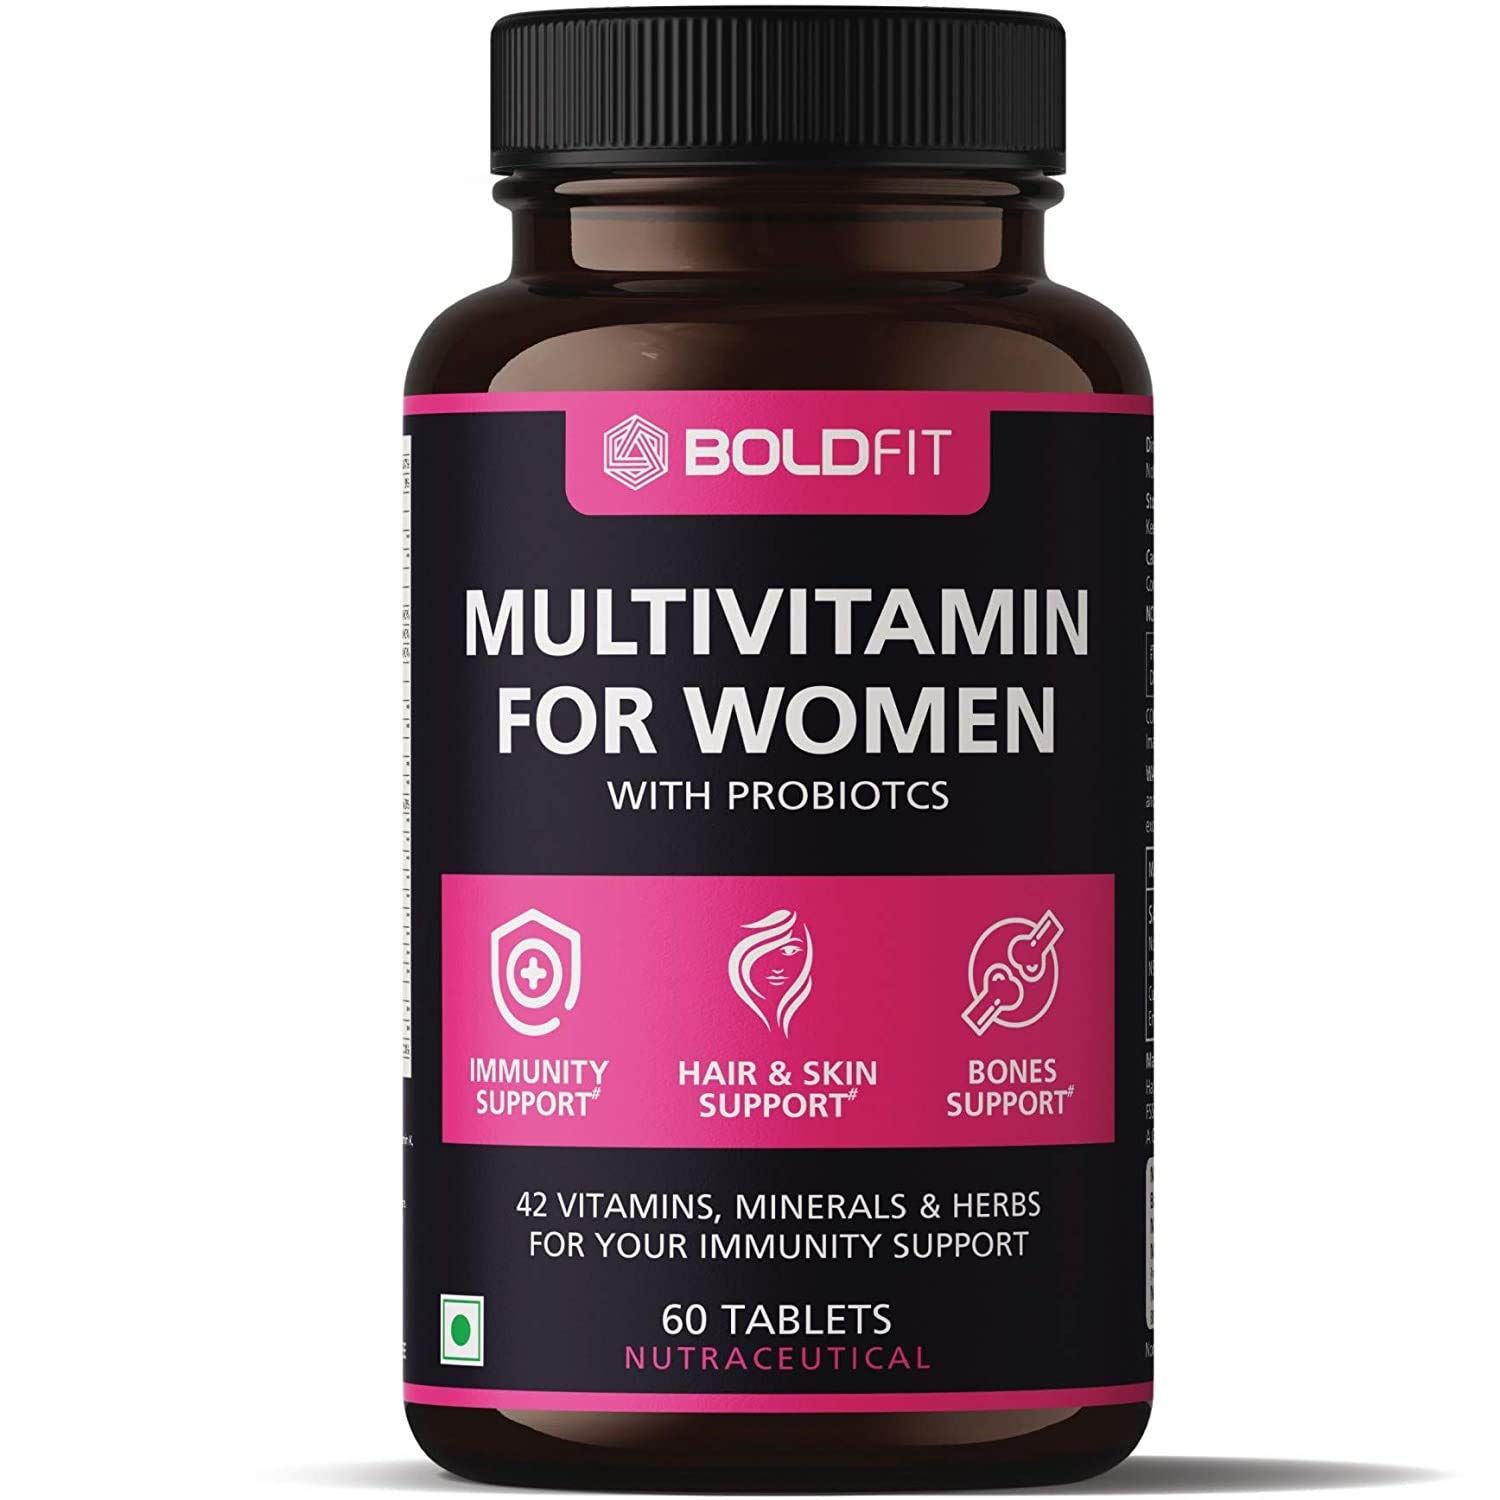 Boldfit Multivitamin For Women Image